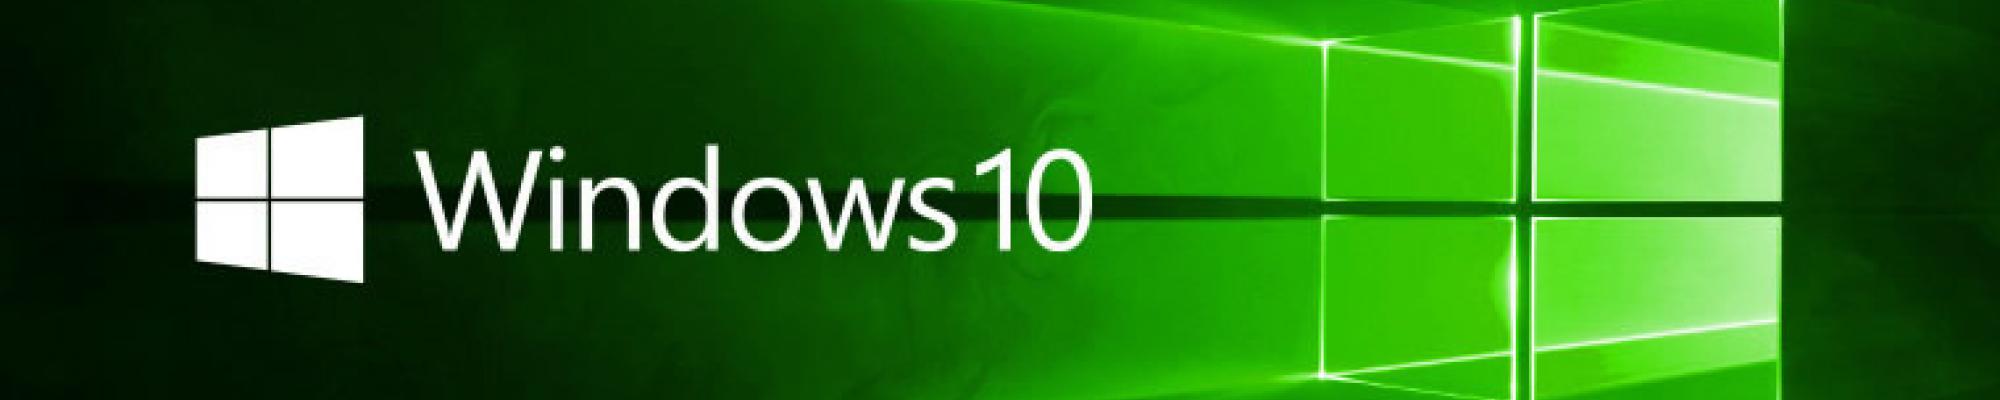 Windows 10: technology update